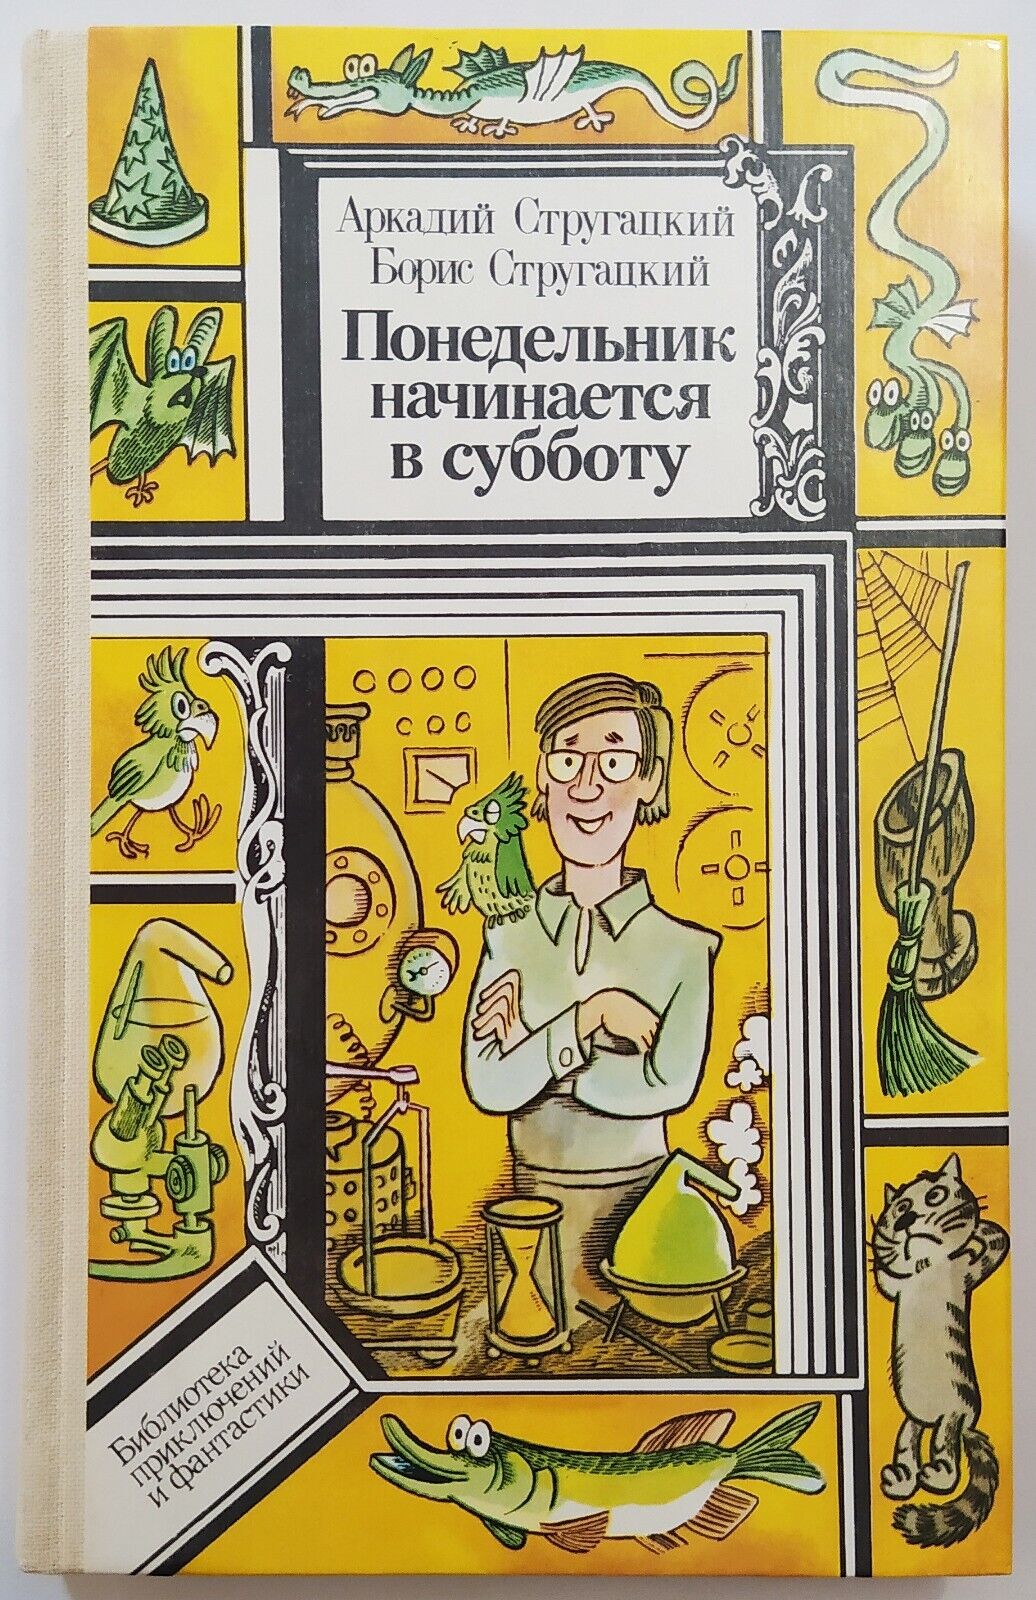 1986 Strugatsky Brothers Monday starts on Saturday fantastic tales Russian book